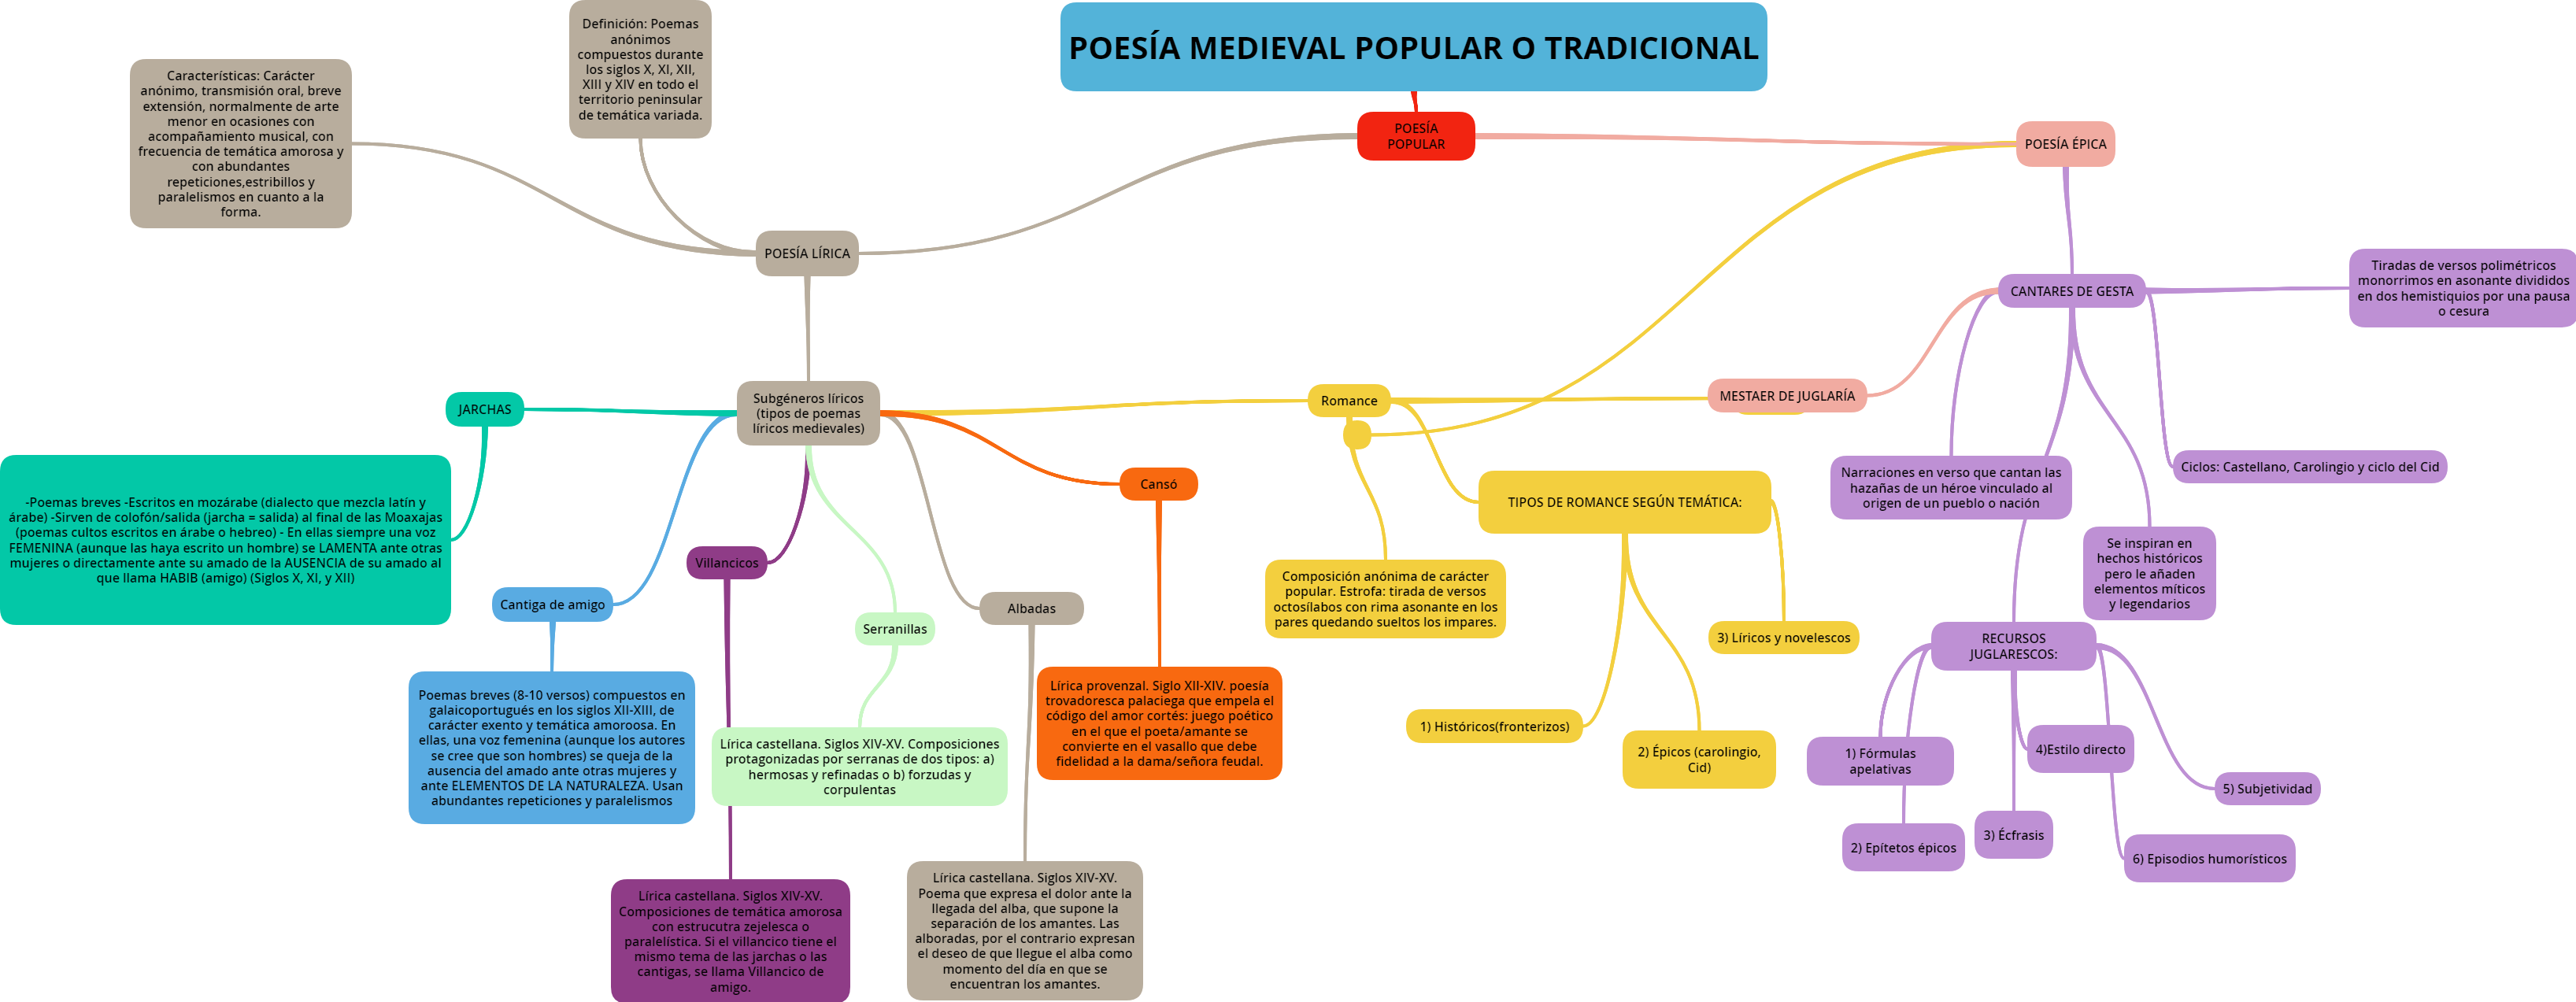 POESÍA MEDIEVAL POPULAR O TRADICIONAL go conqr.png